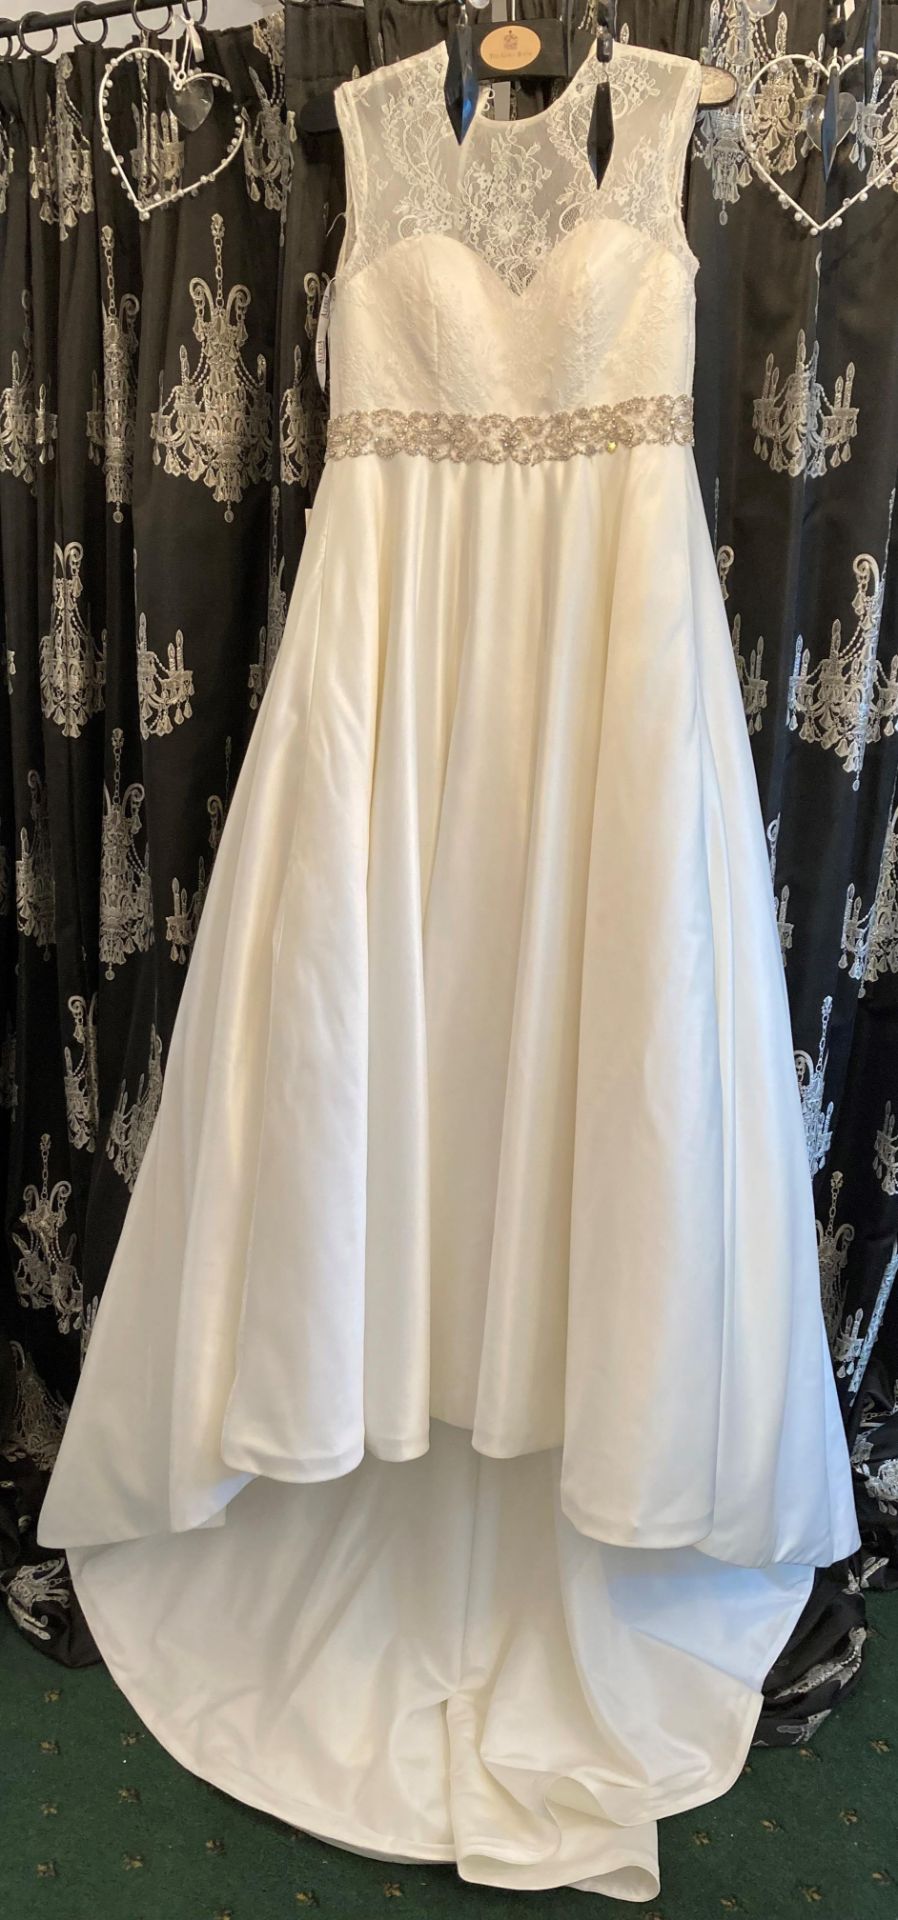 Alexia Designs satin ball gown, ivory, size UK 12.